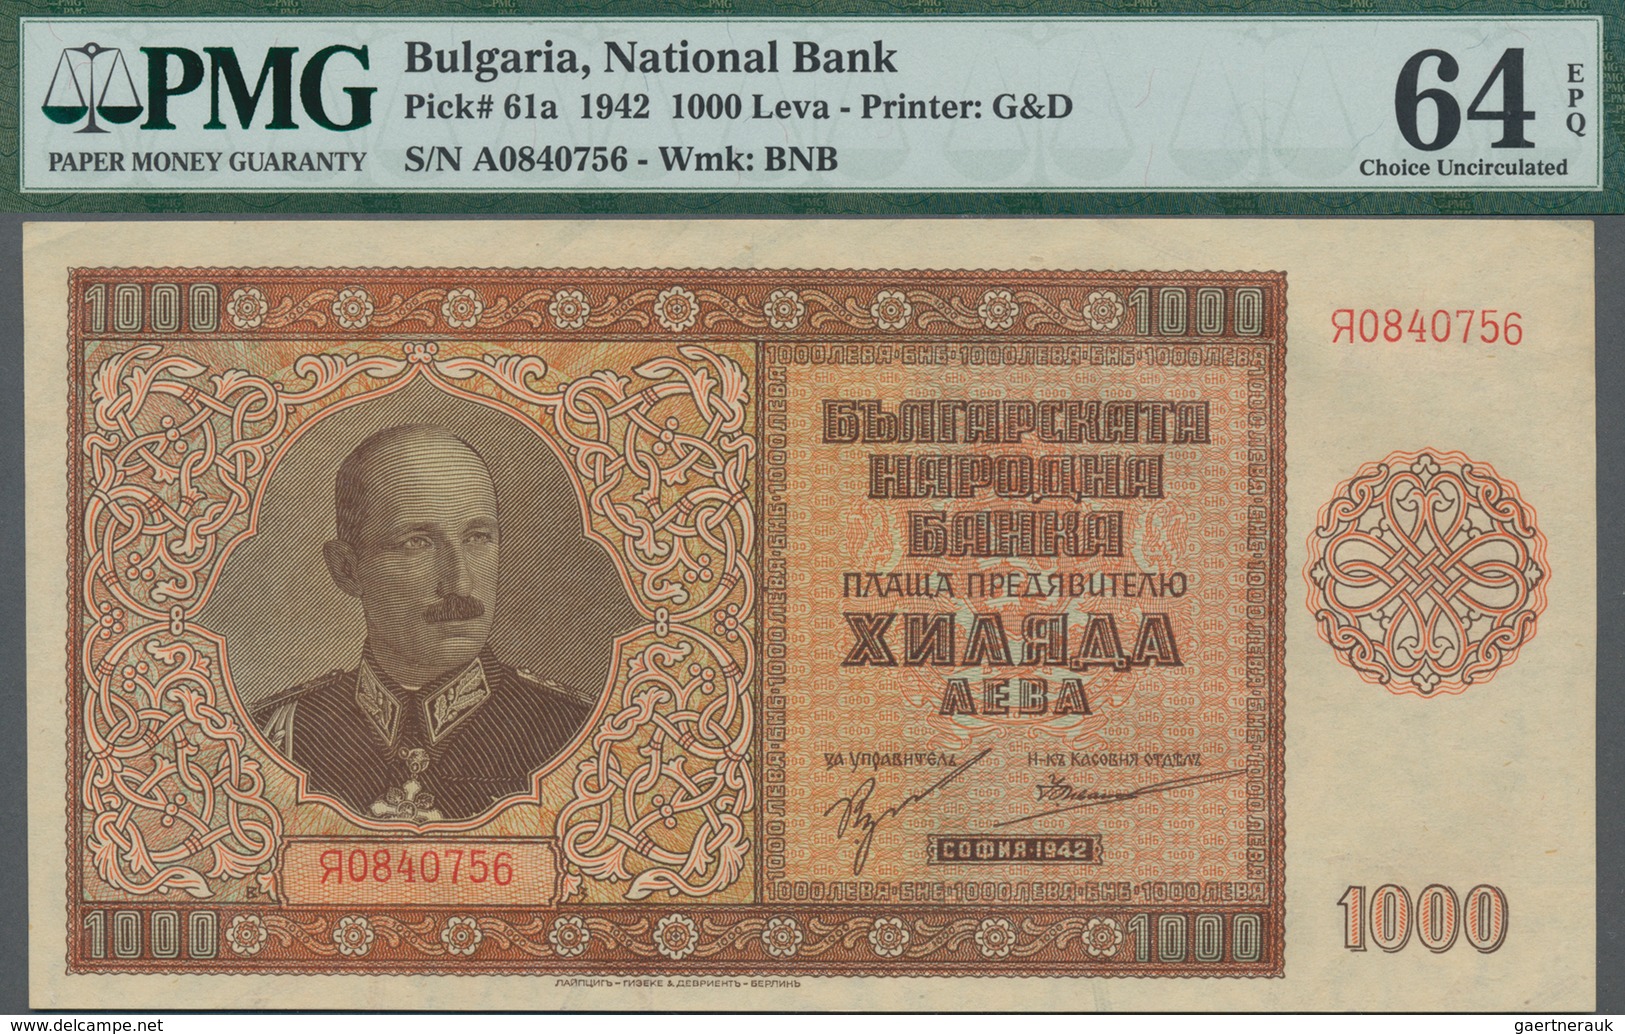 Bulgaria / Bulgarien: National Bank Of Bulgaria 1000 Leva 1942, P.61a, PMG Graded 64 Choice Uncircul - Bulgarie